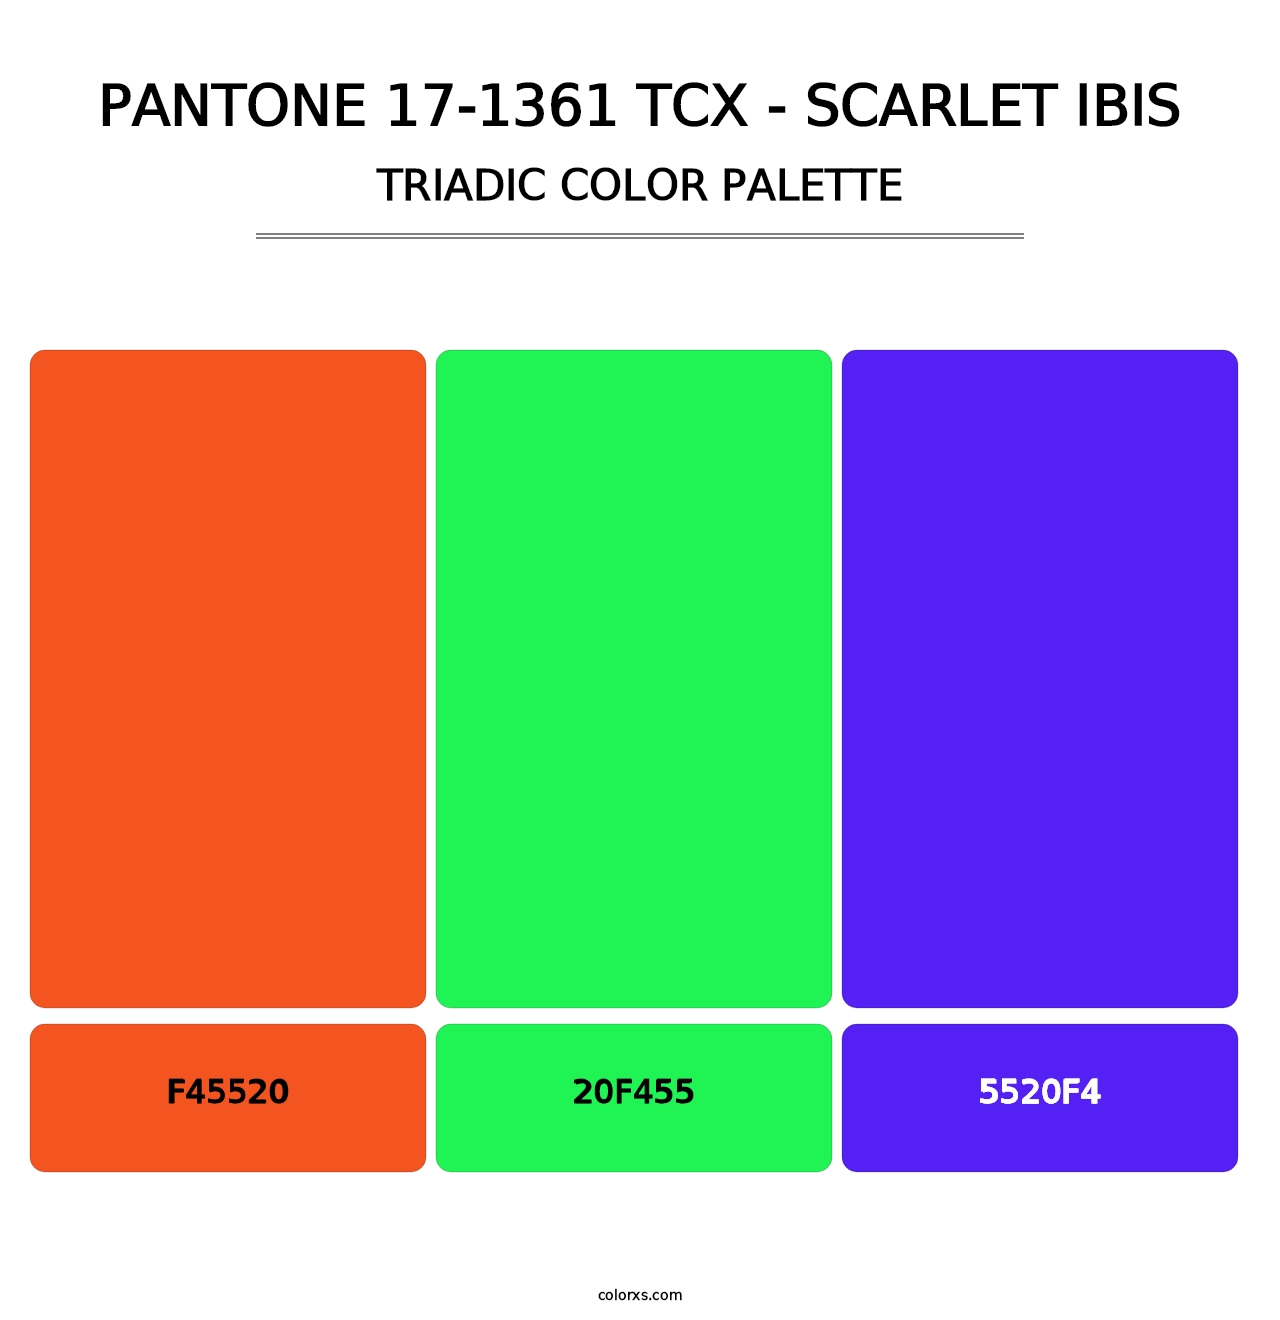 PANTONE 17-1361 TCX - Scarlet Ibis - Triadic Color Palette